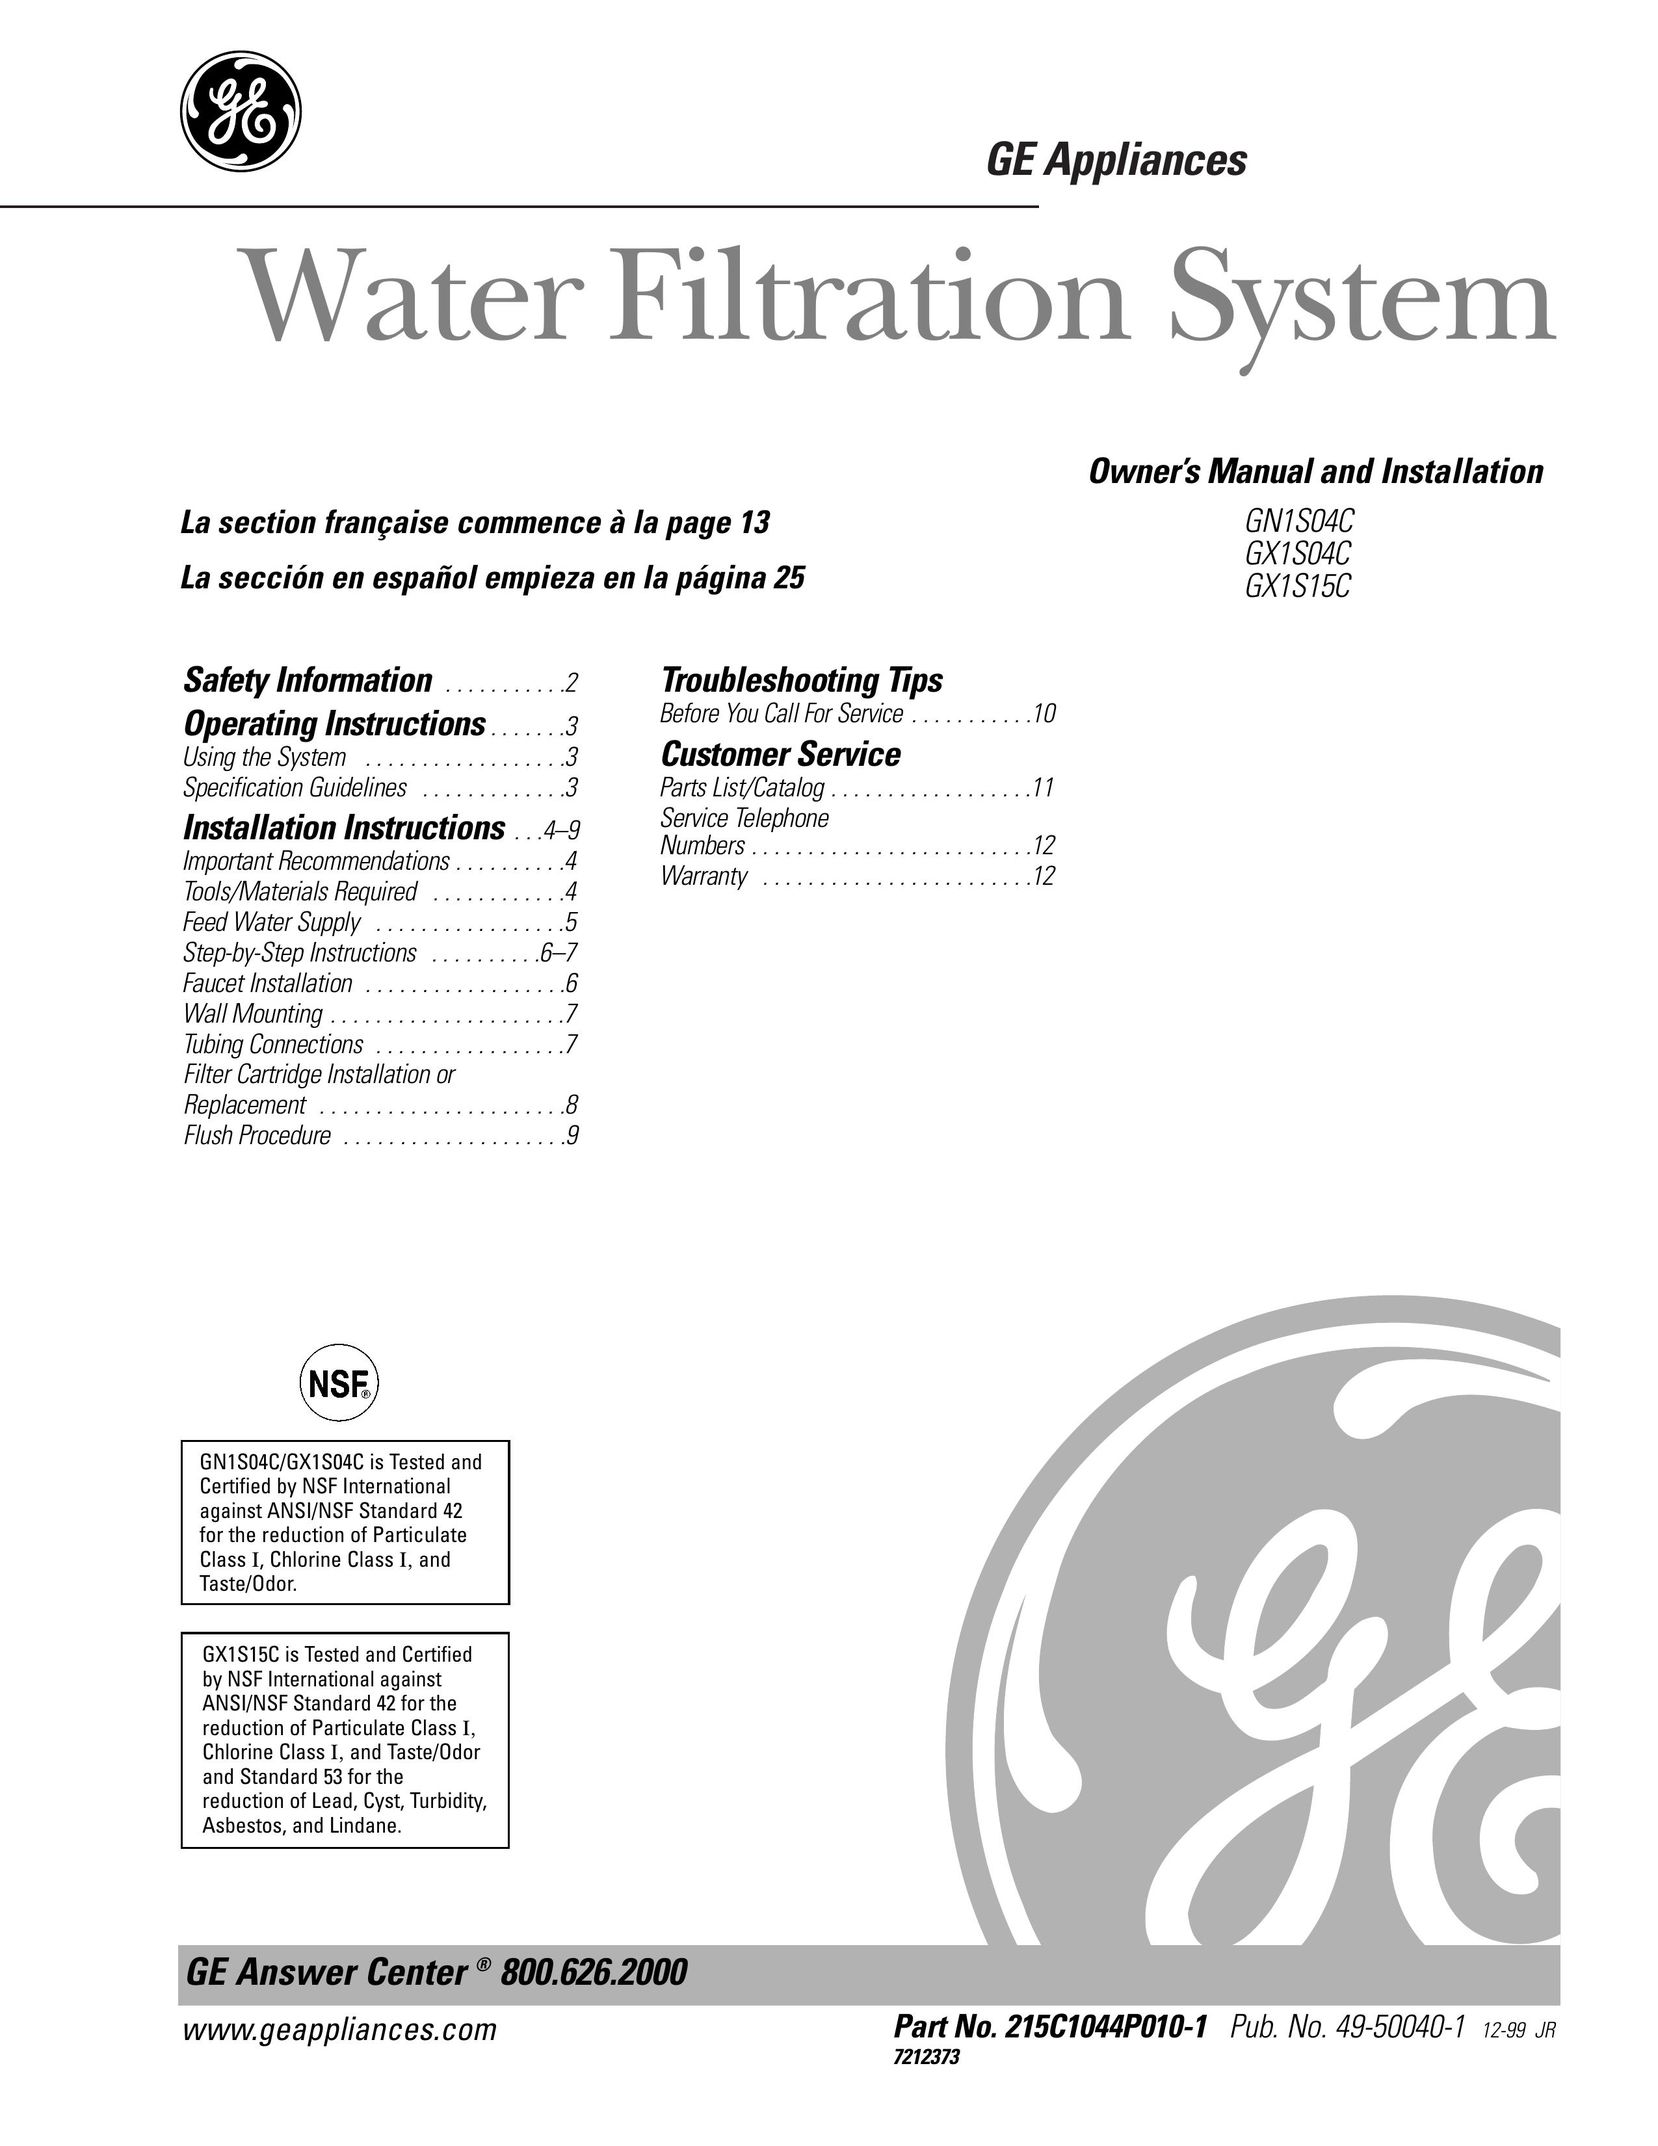 GE GX1S15C Water System User Manual